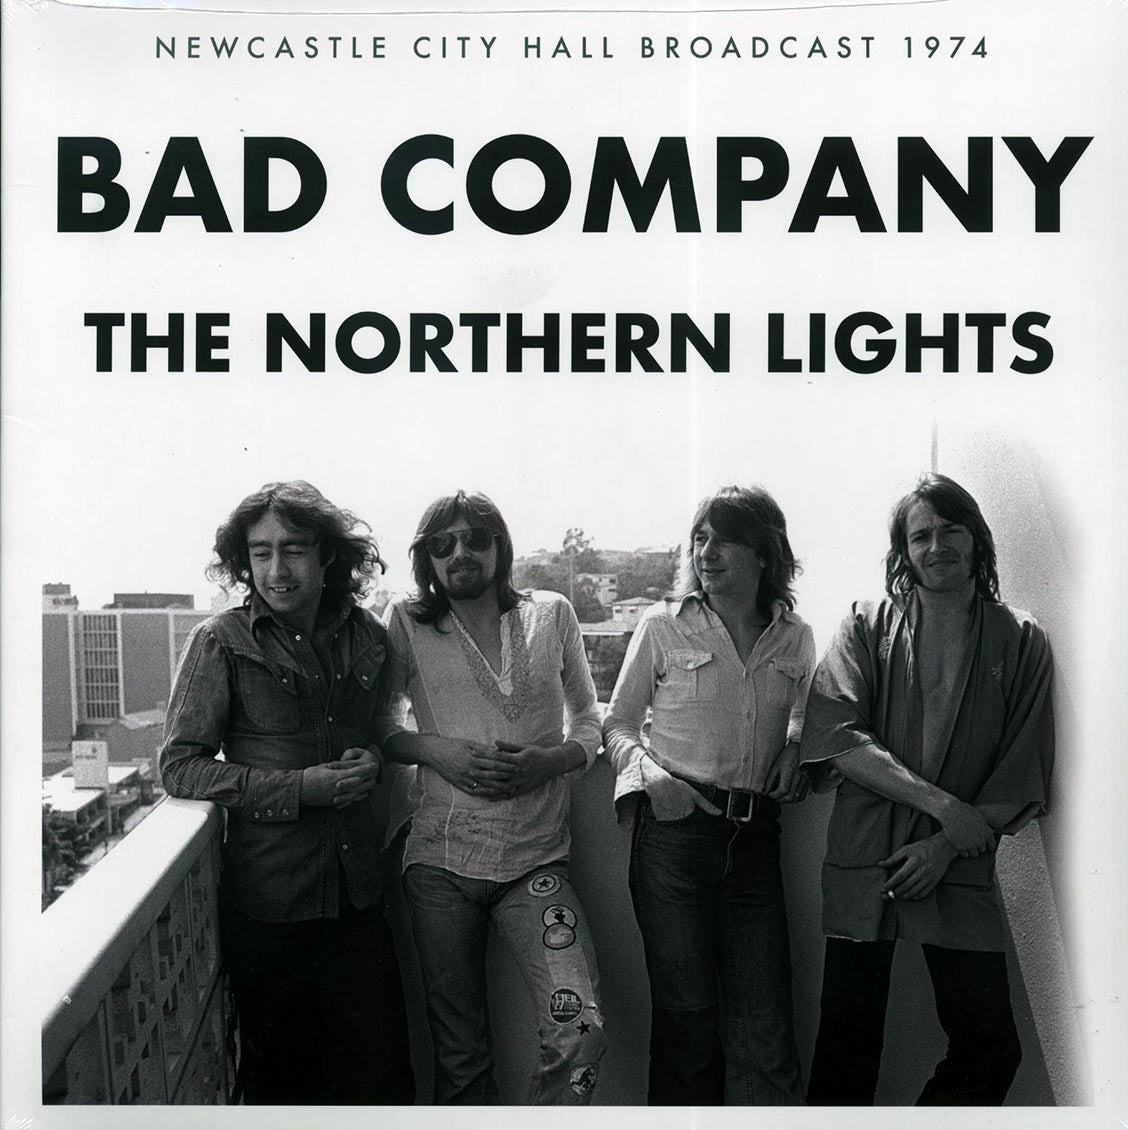 Bad Company - The Northern Lights: Newcastle City Hall Broadcast 1974 (ltd. ed.) (2xLP) - Vinyl LP